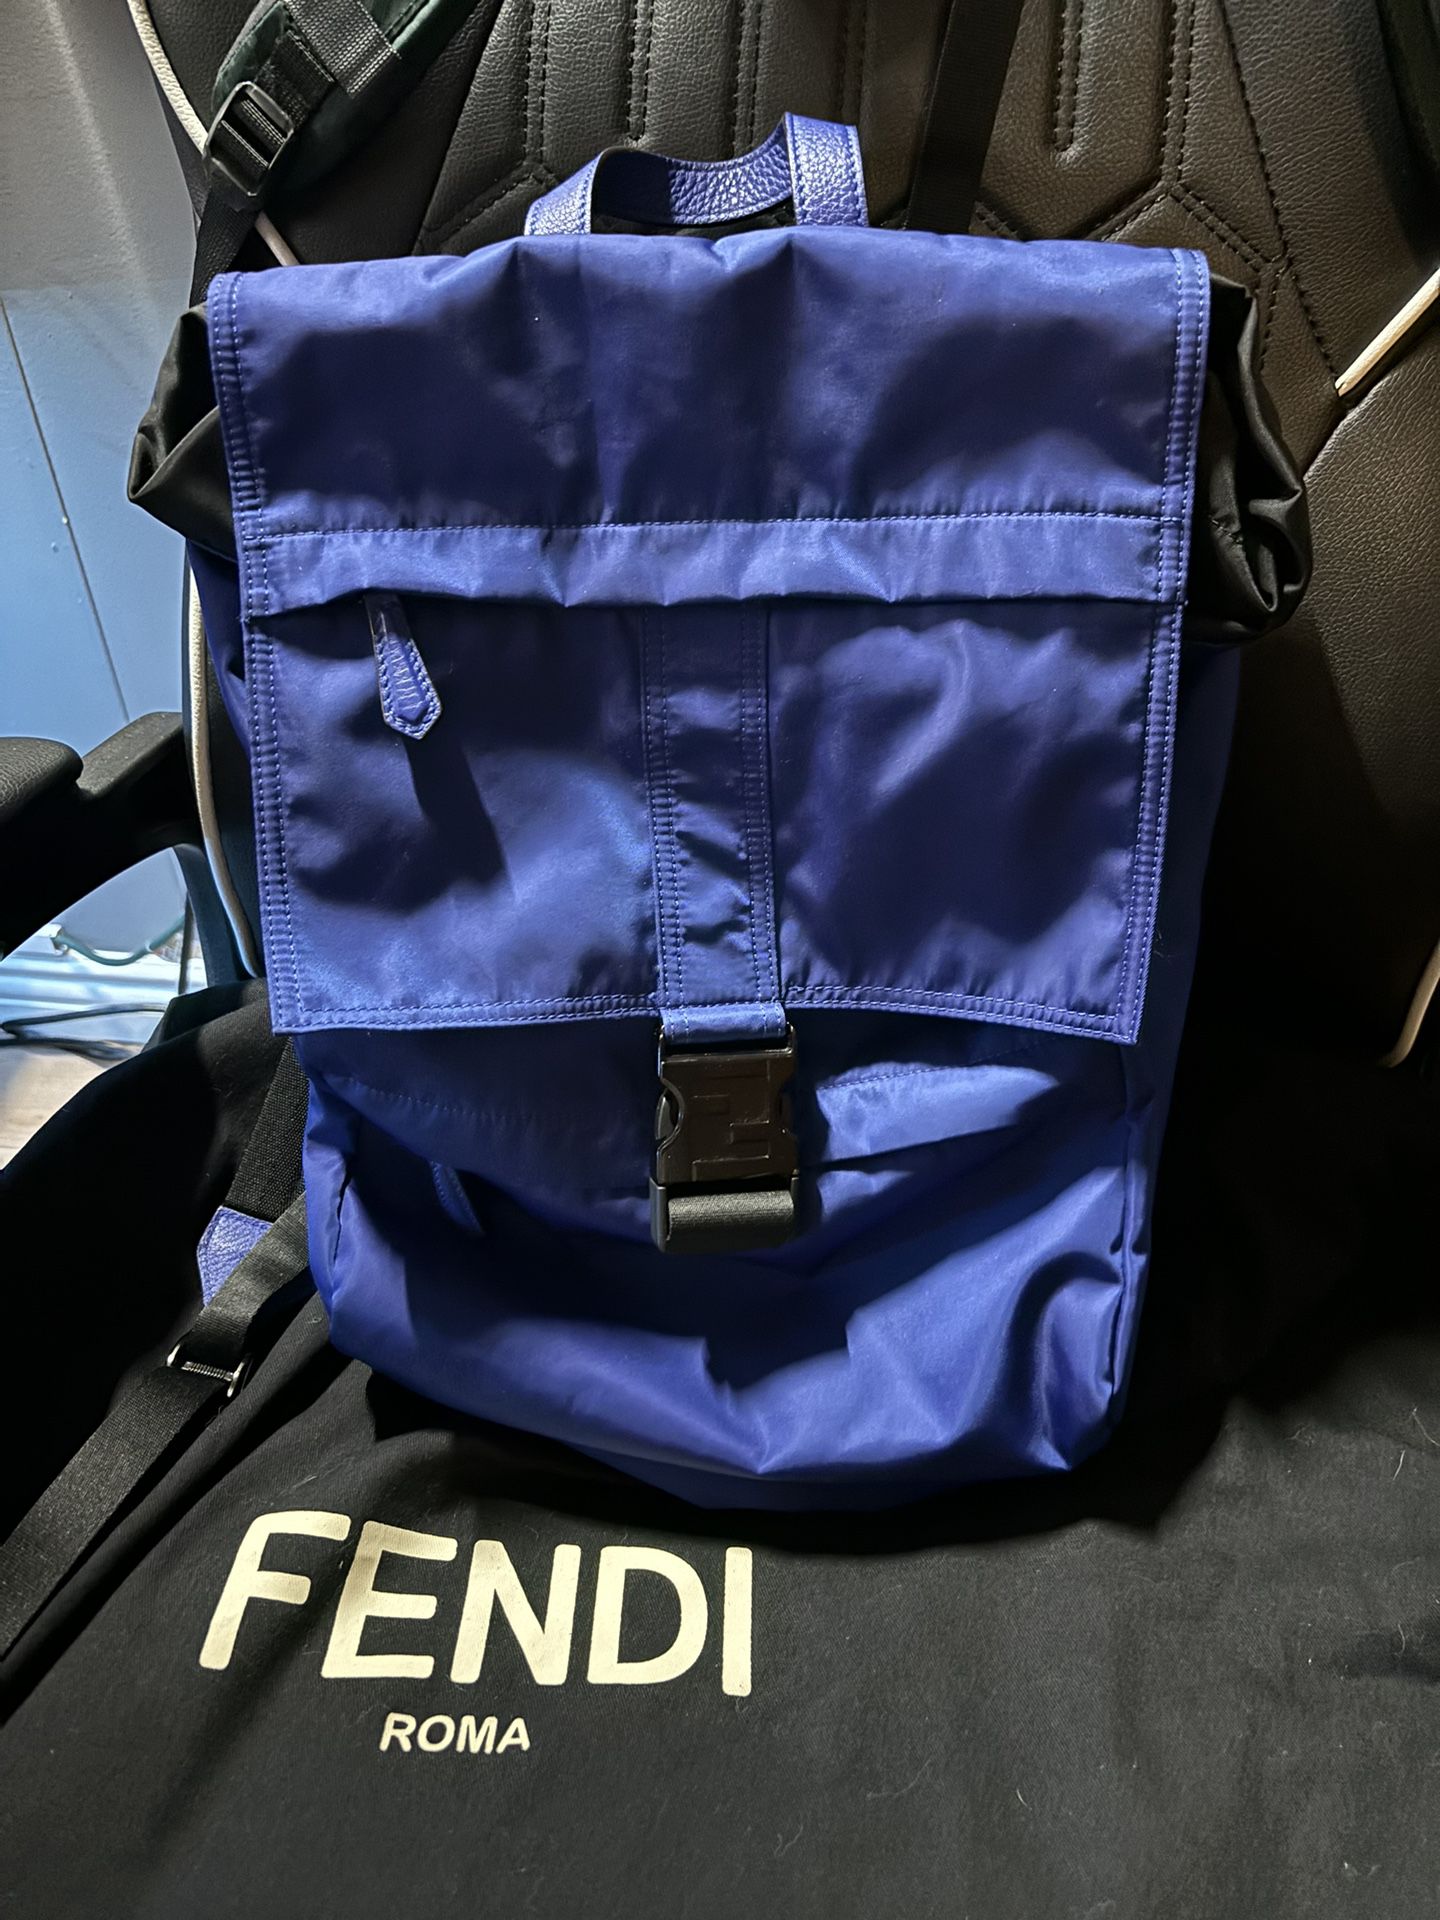 Fendi Nylon/leather Backpack $350 OBO